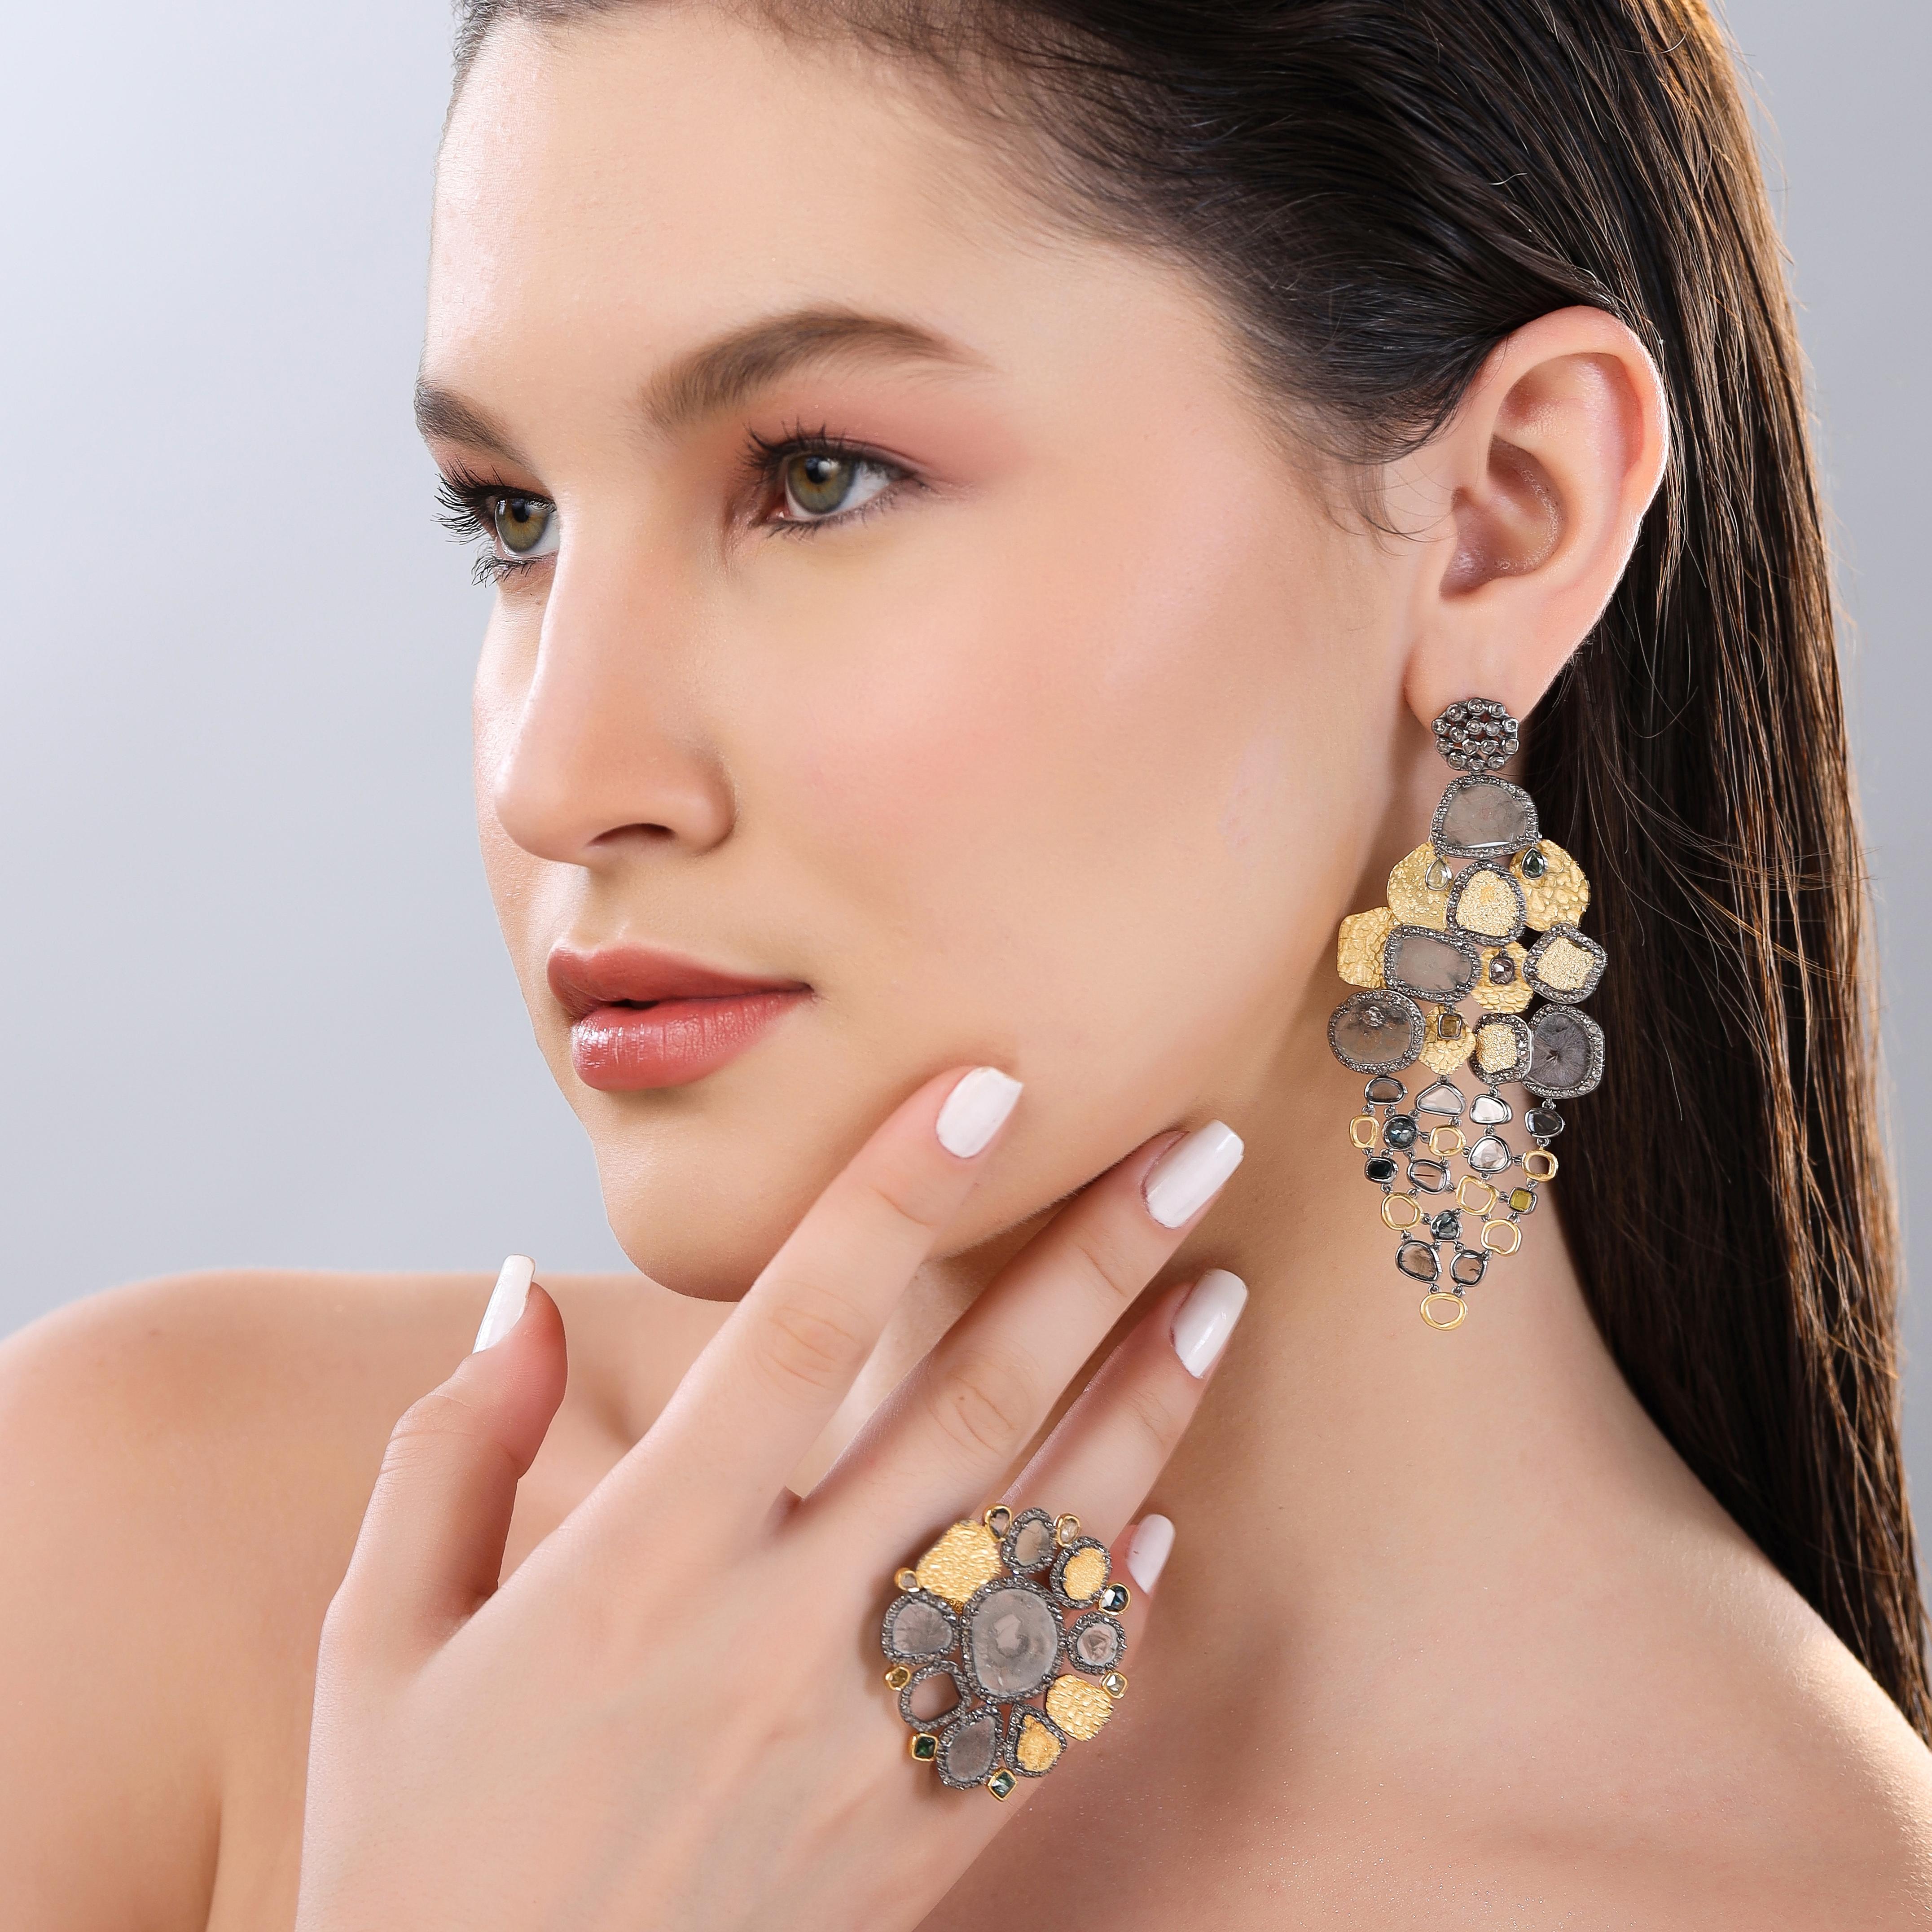 Modern A.deitiy silver earrings with flat diamonds & 3-micron gold & rhodium plating 